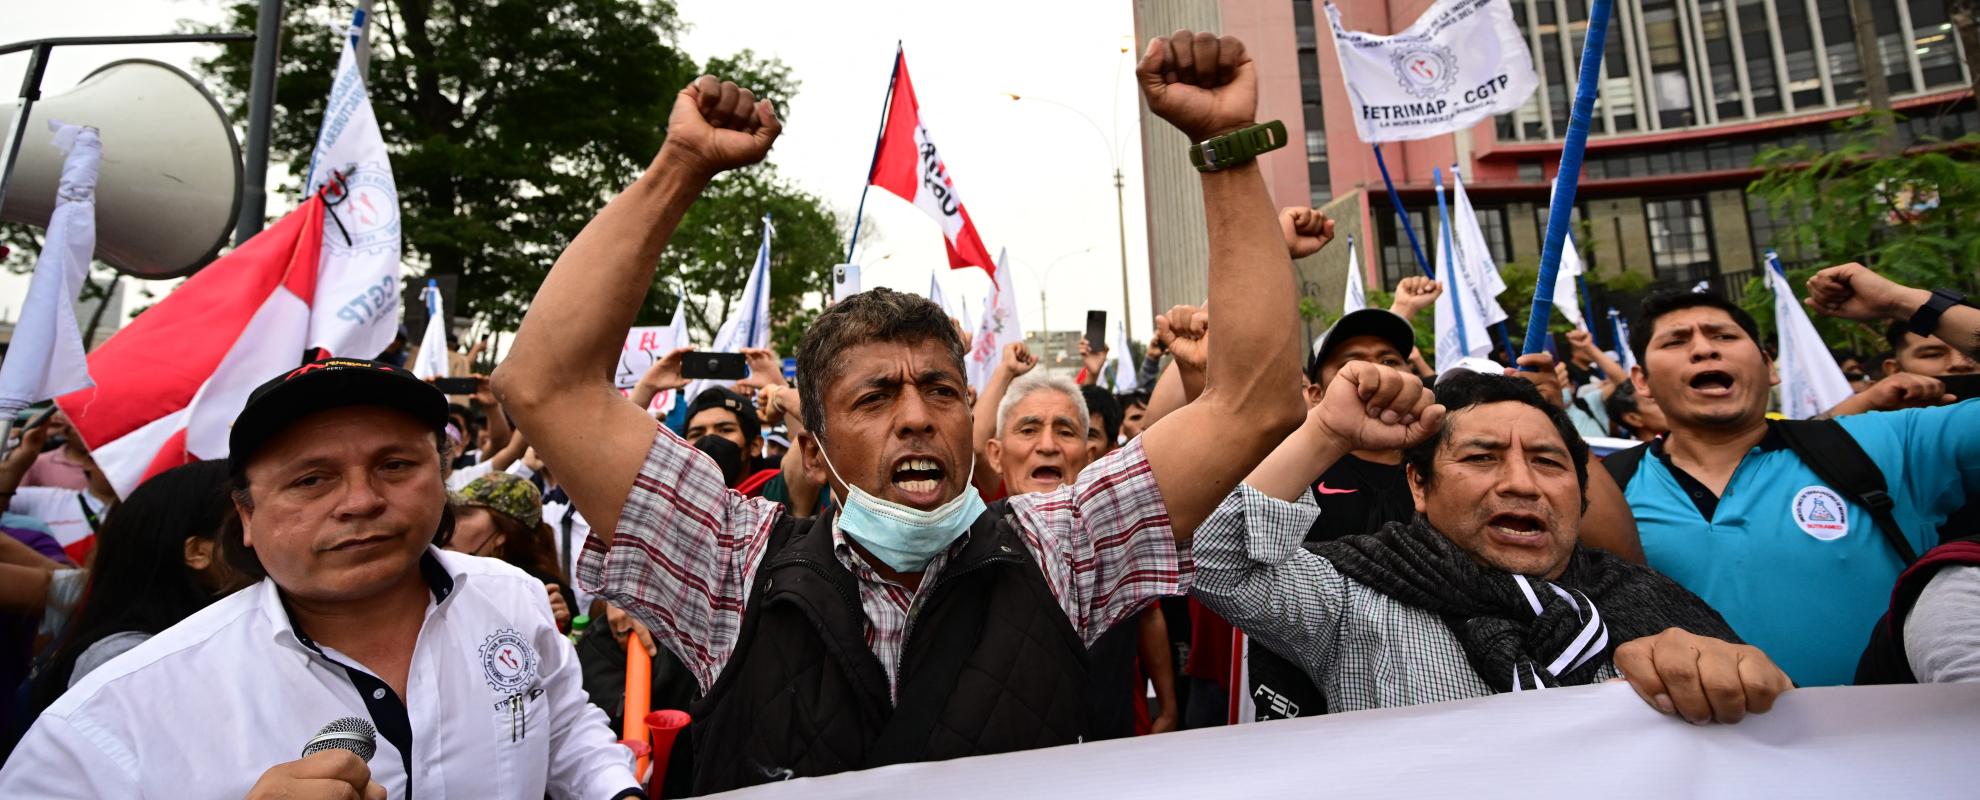 Staatgreep in Peru maakt slachtoffers